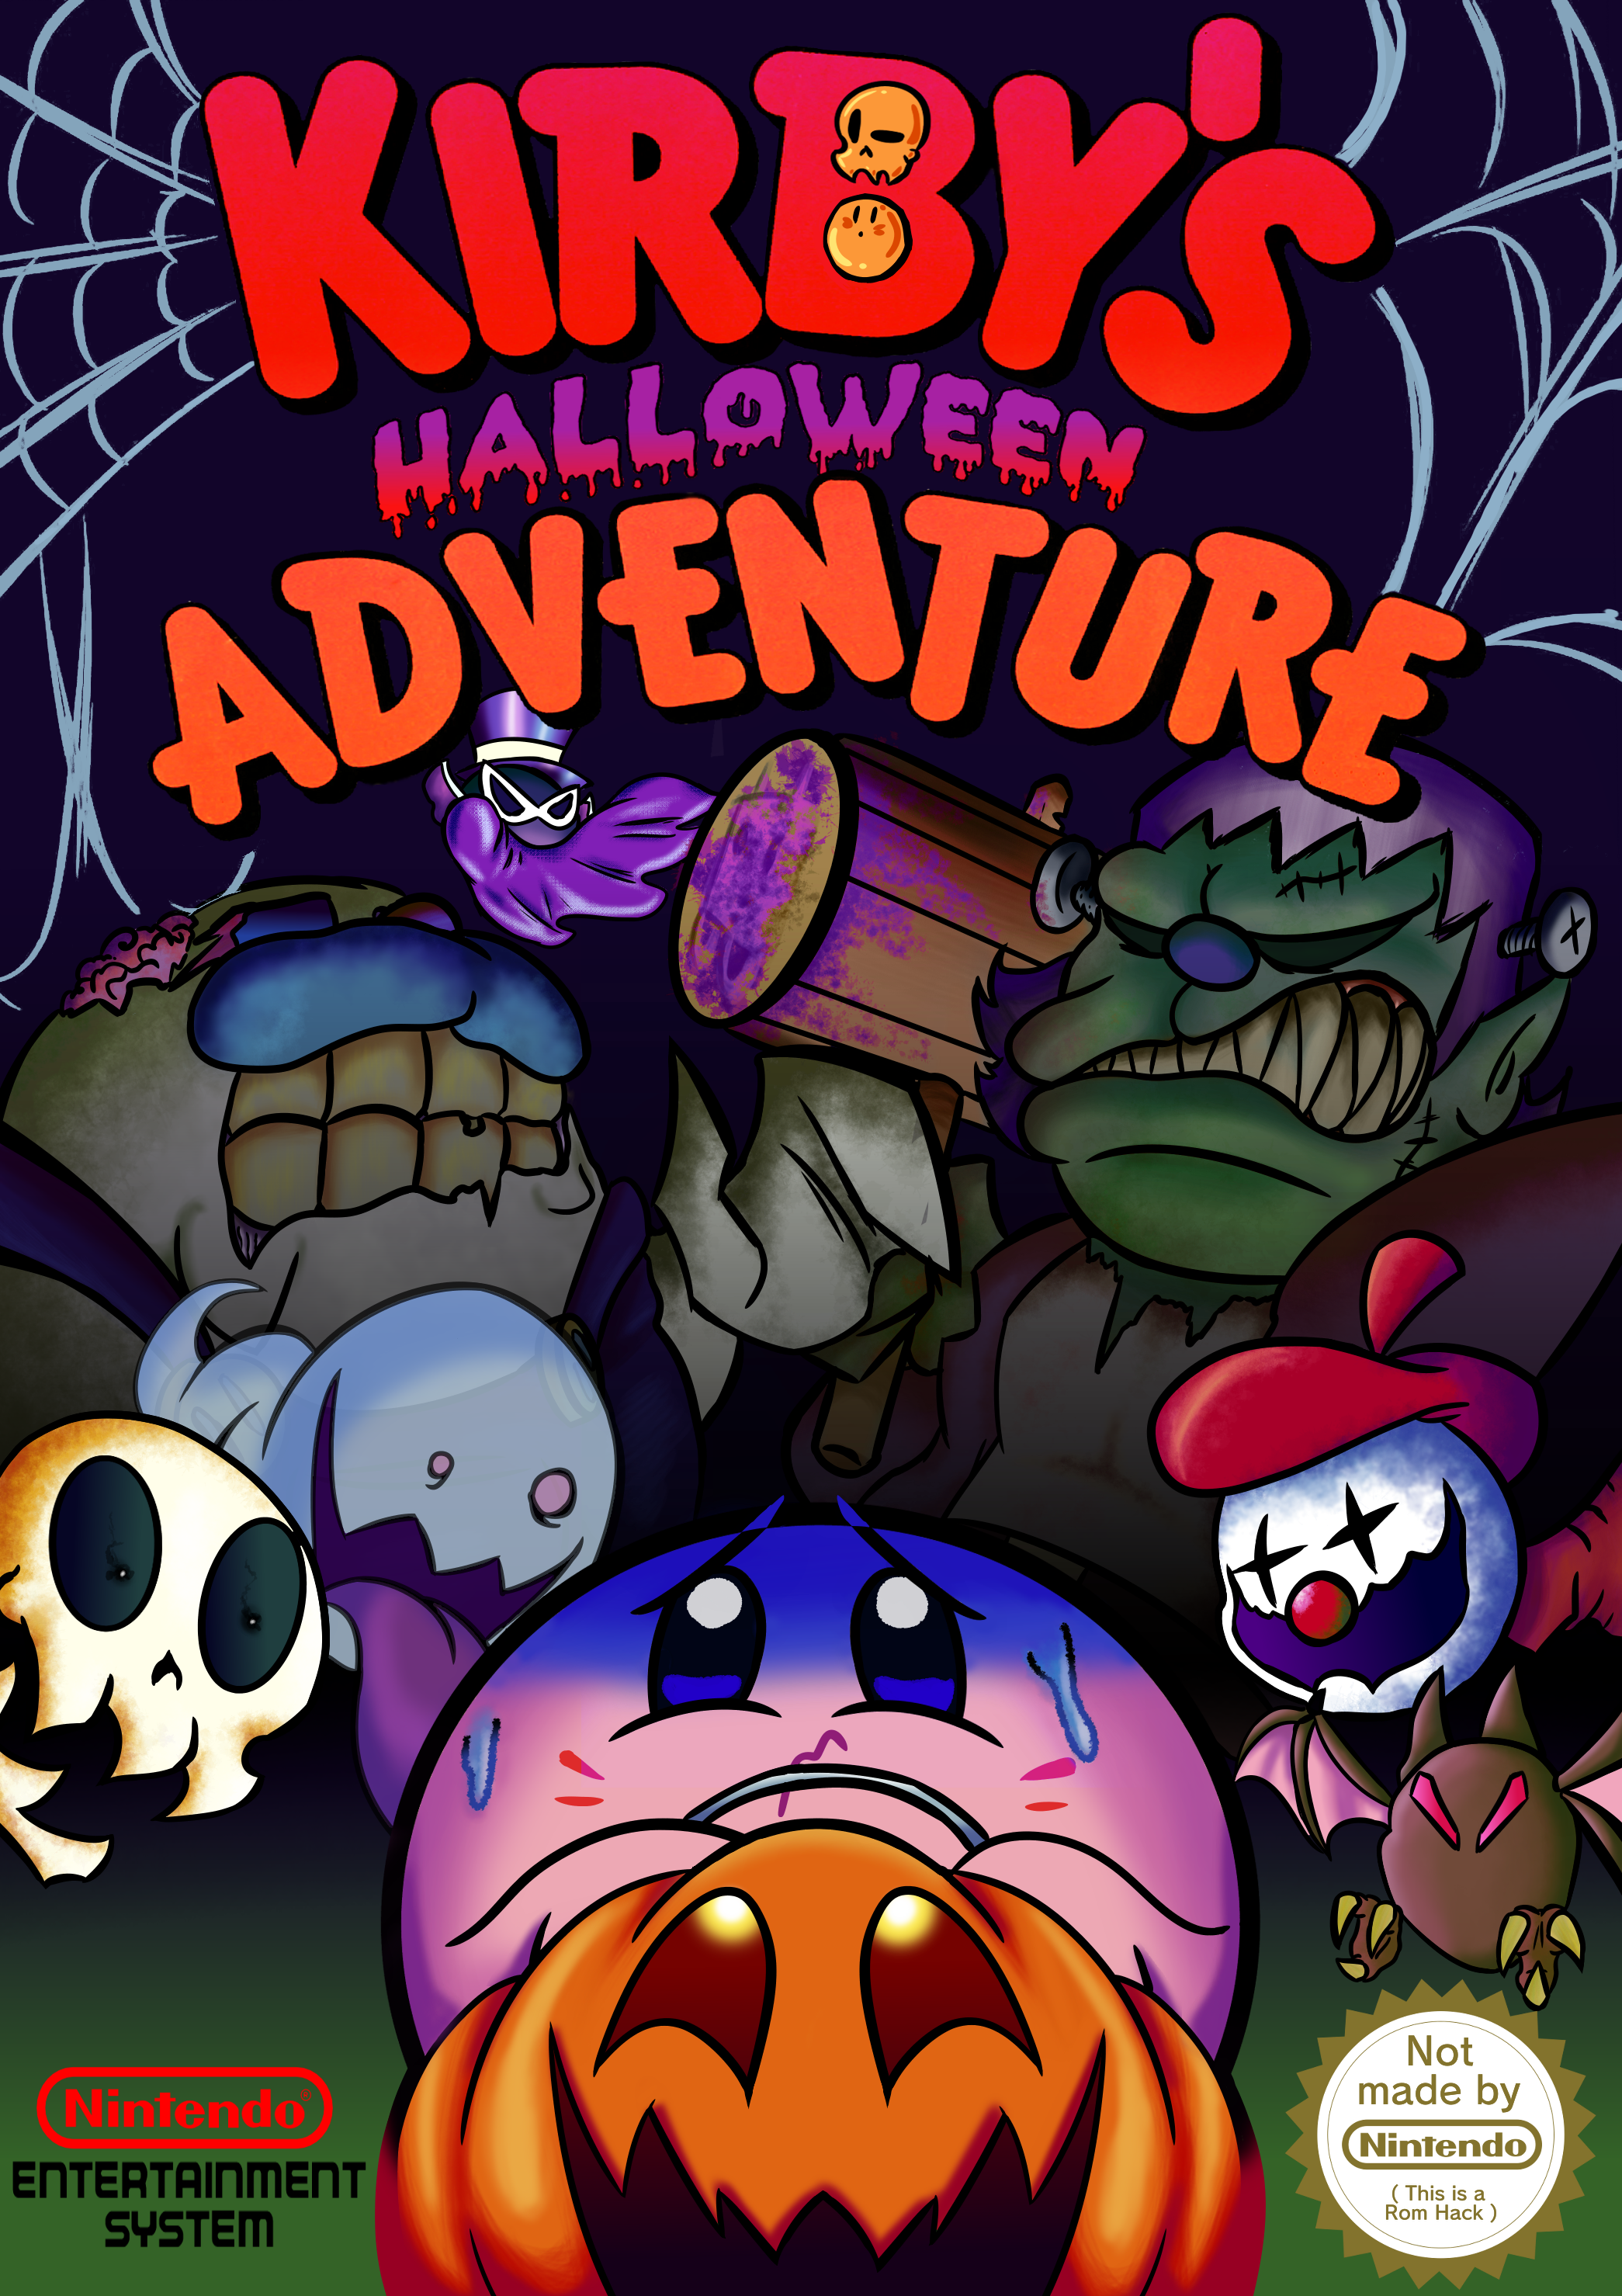 Kirby's Adventure - All Copy Abilities 